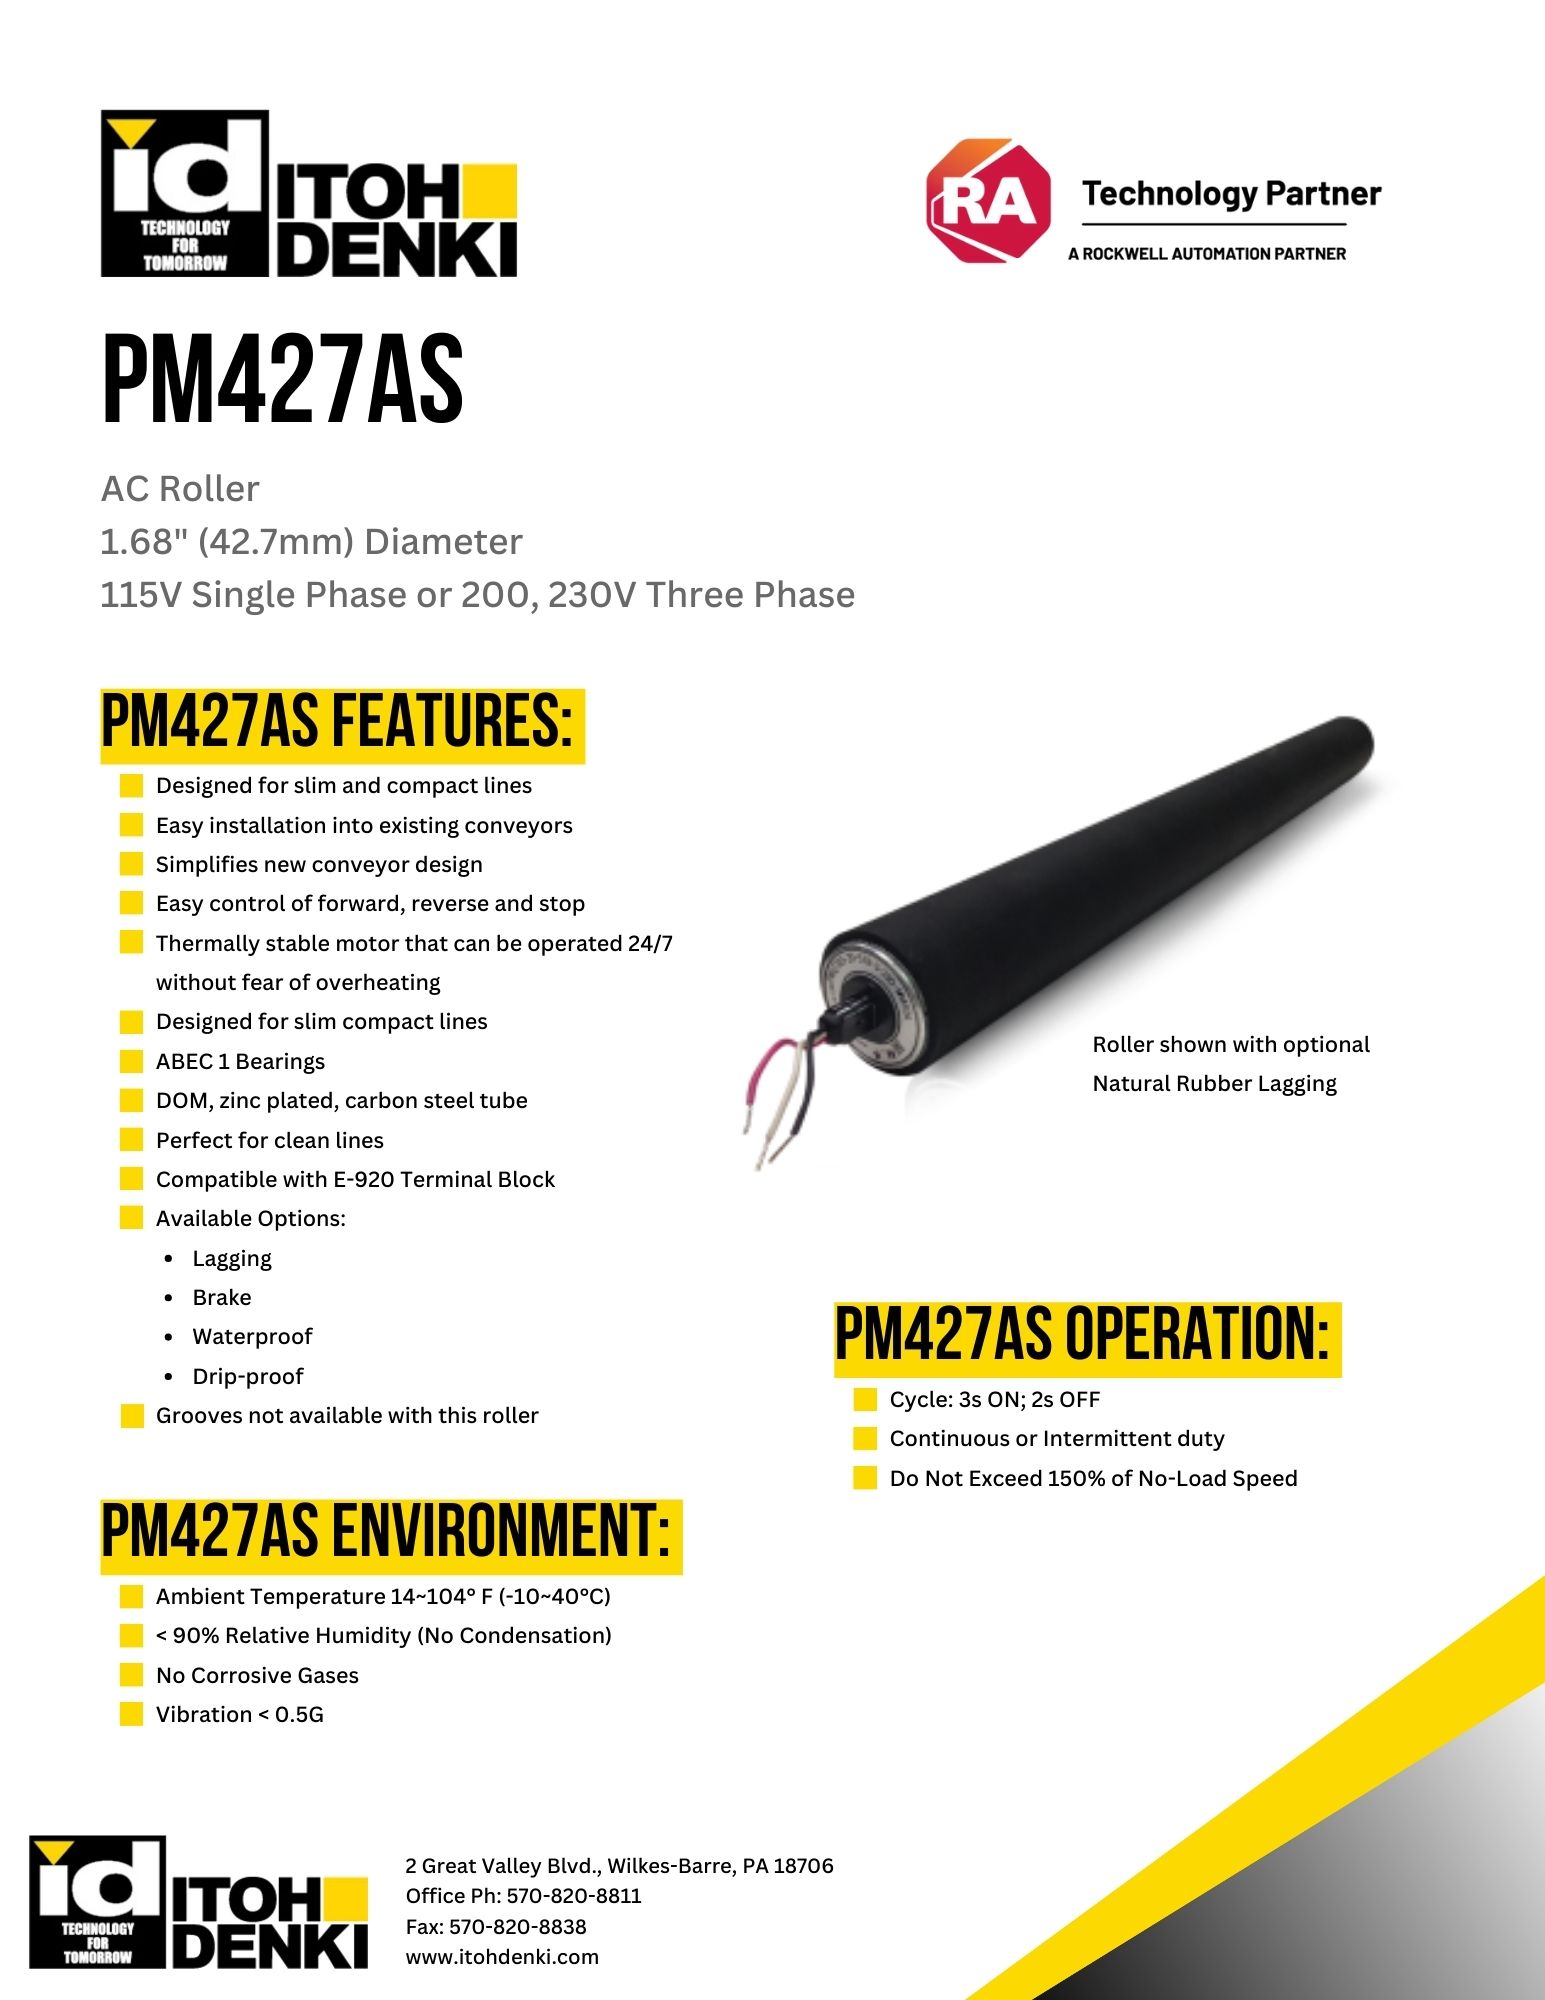 Itoh Denki PM427AS AC roller product sheet